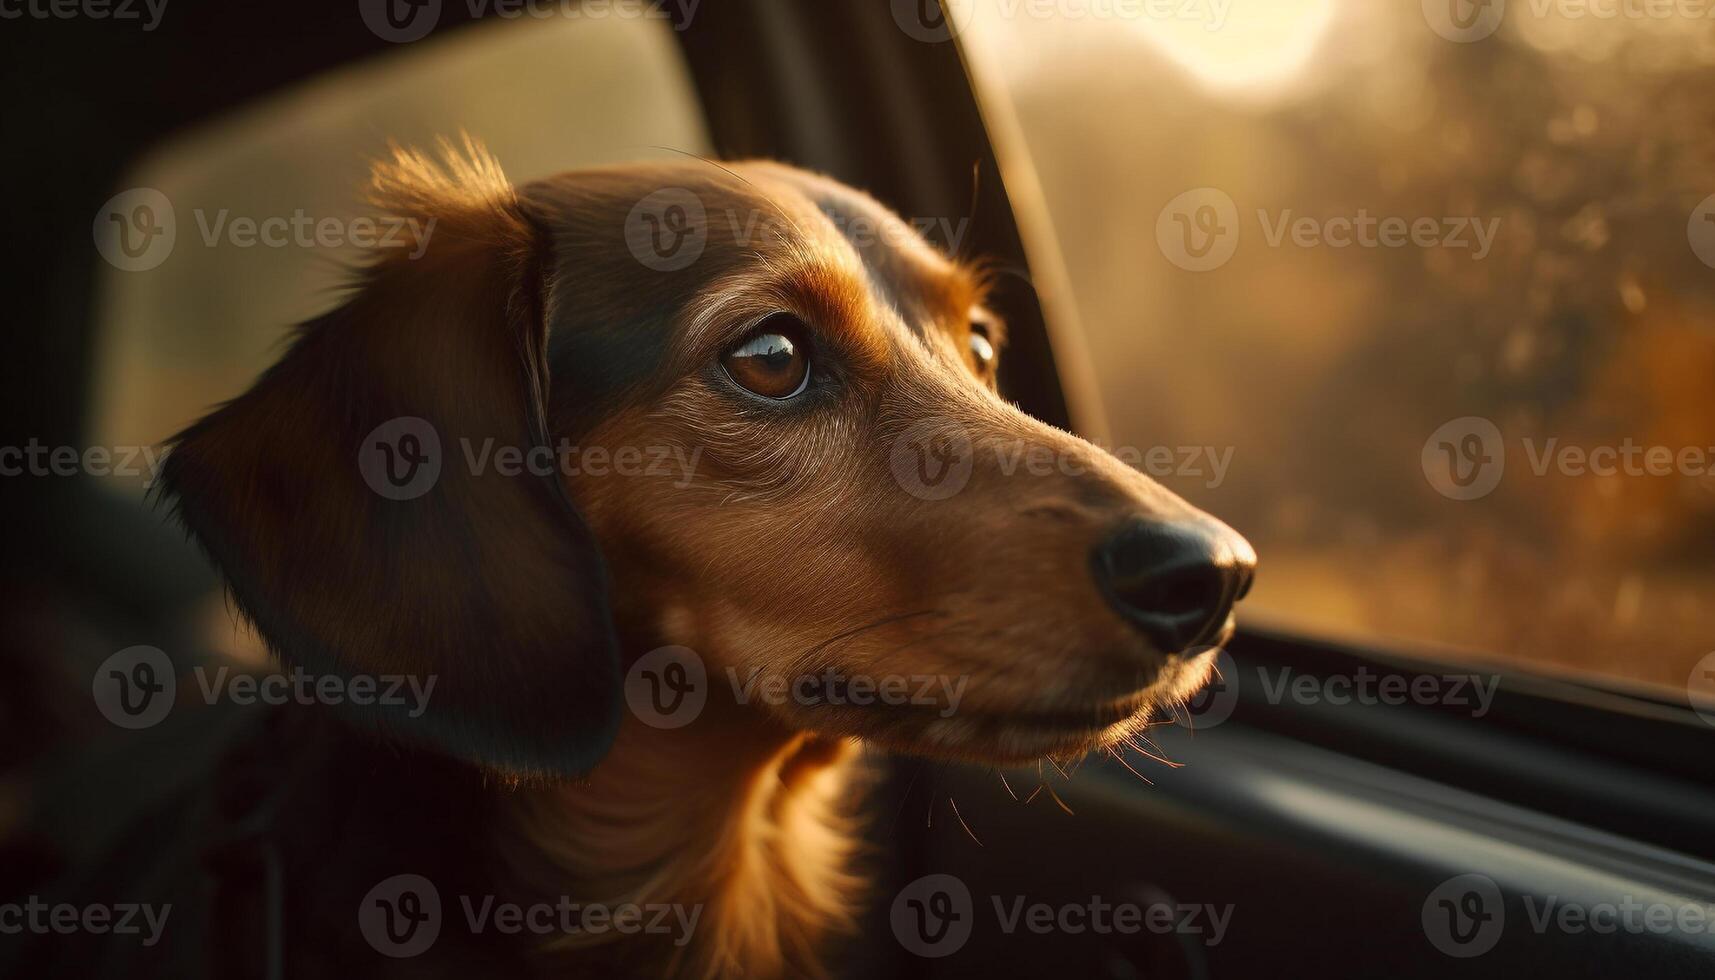 Cute purebred dachshund sitting in car window generated by AI photo